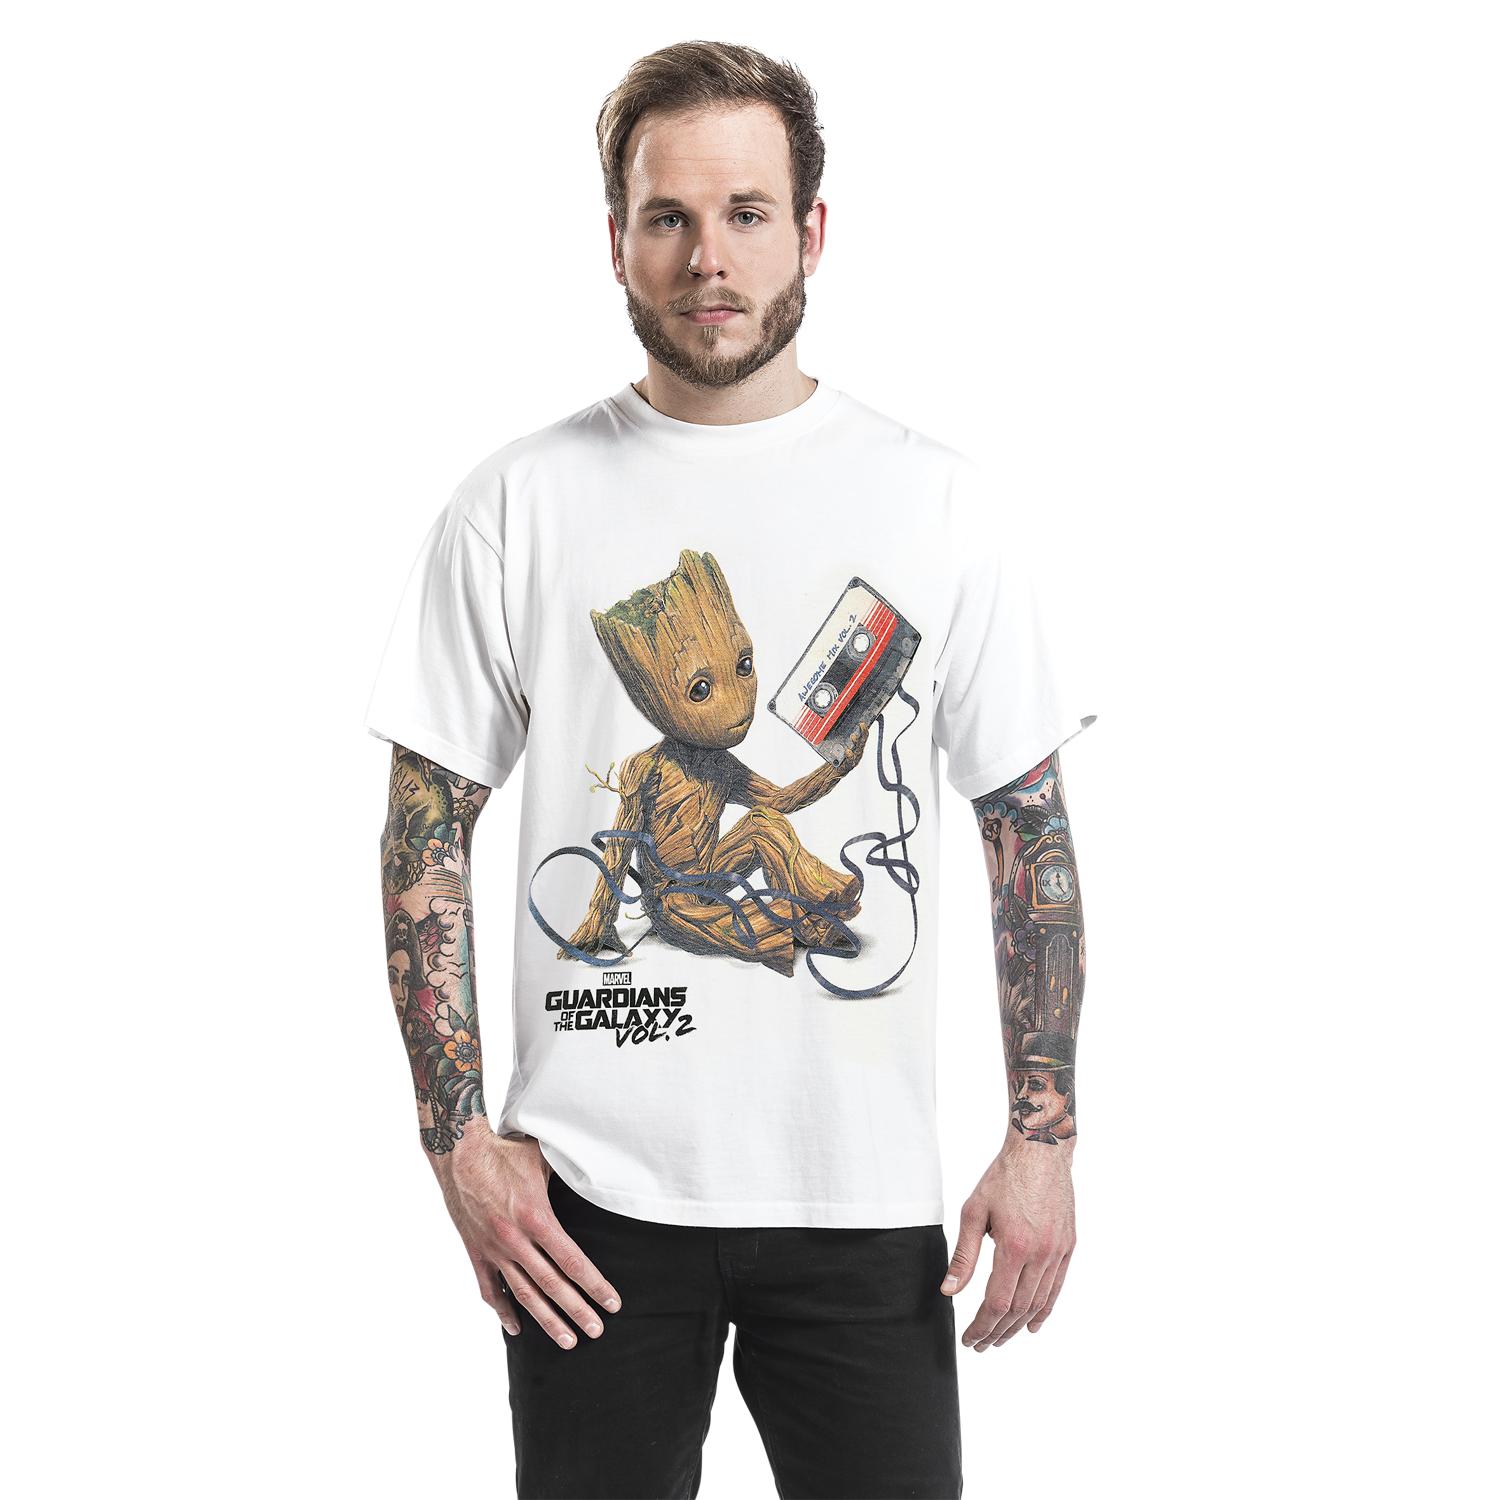 Groot & Tape T-shirt Design man